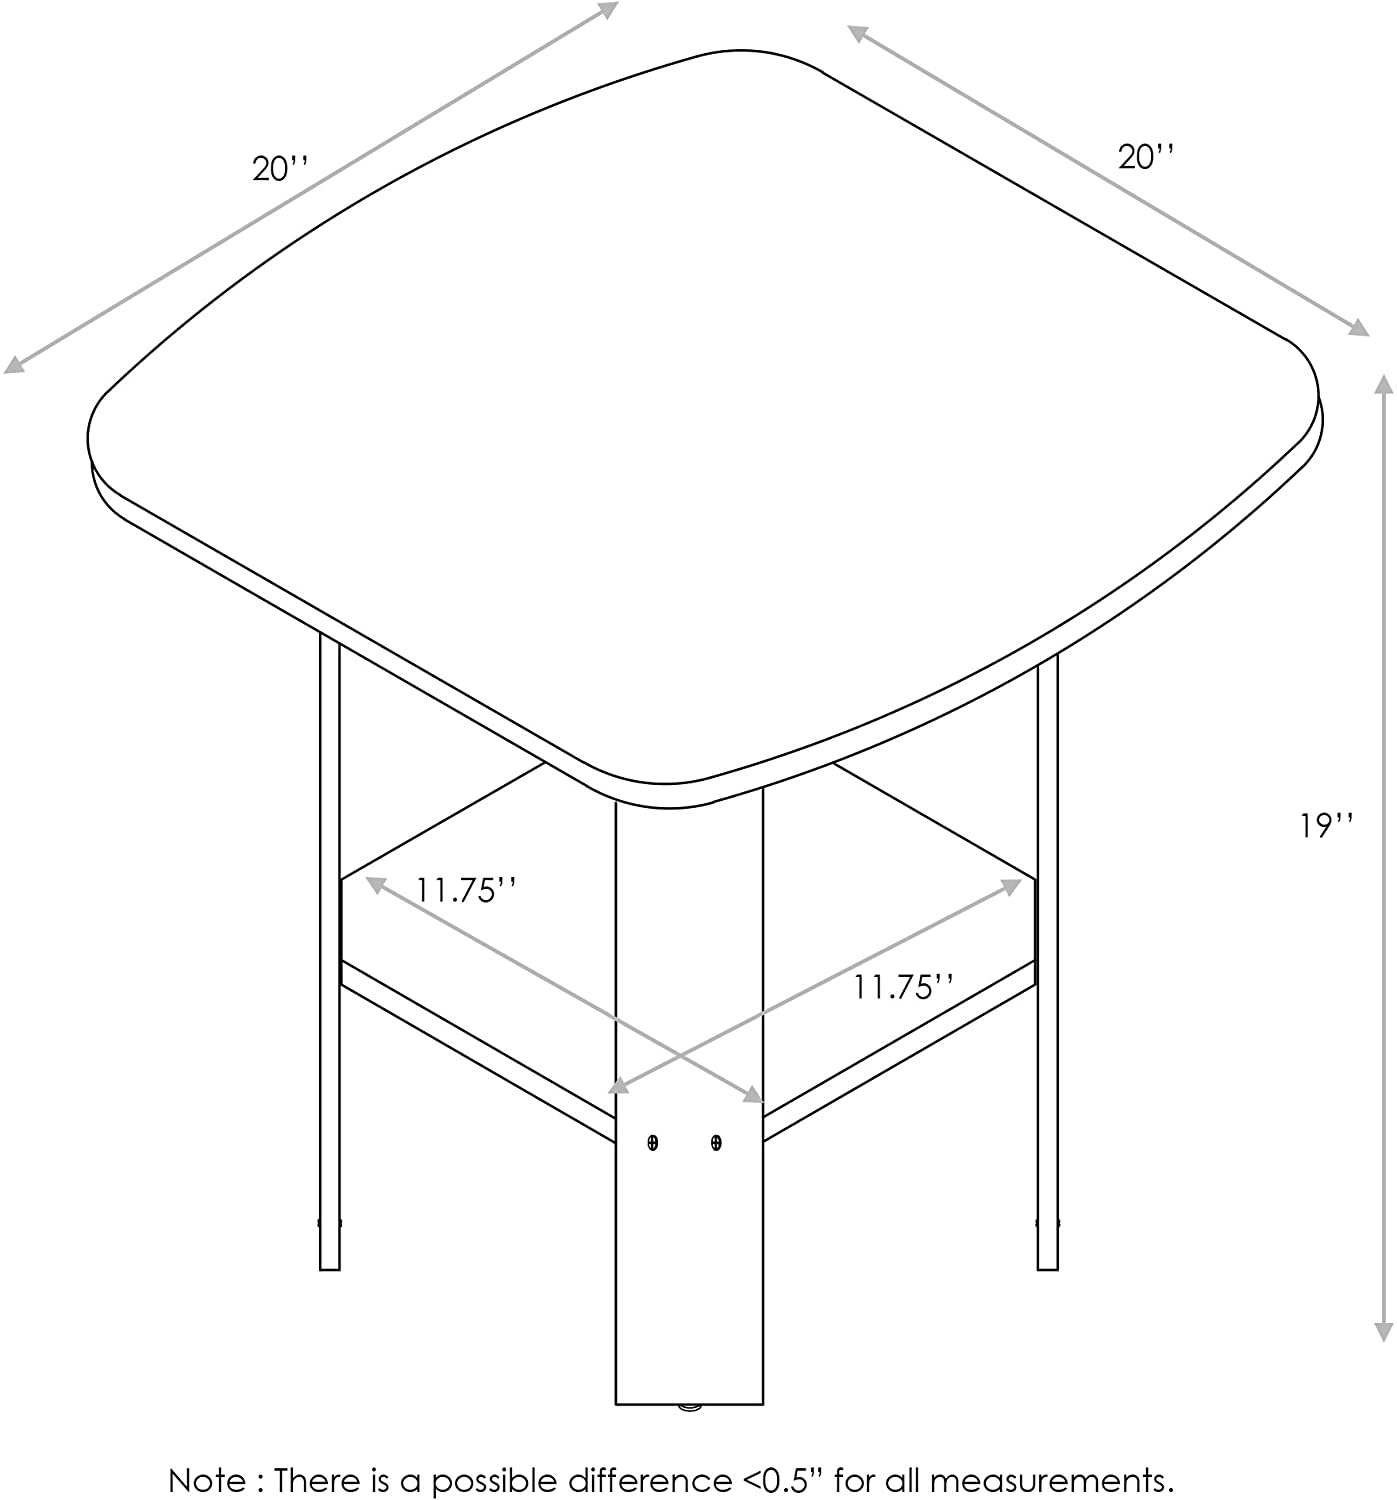 Side Tables Design End SideTable, 1 Pack, Columbia Walnut Black